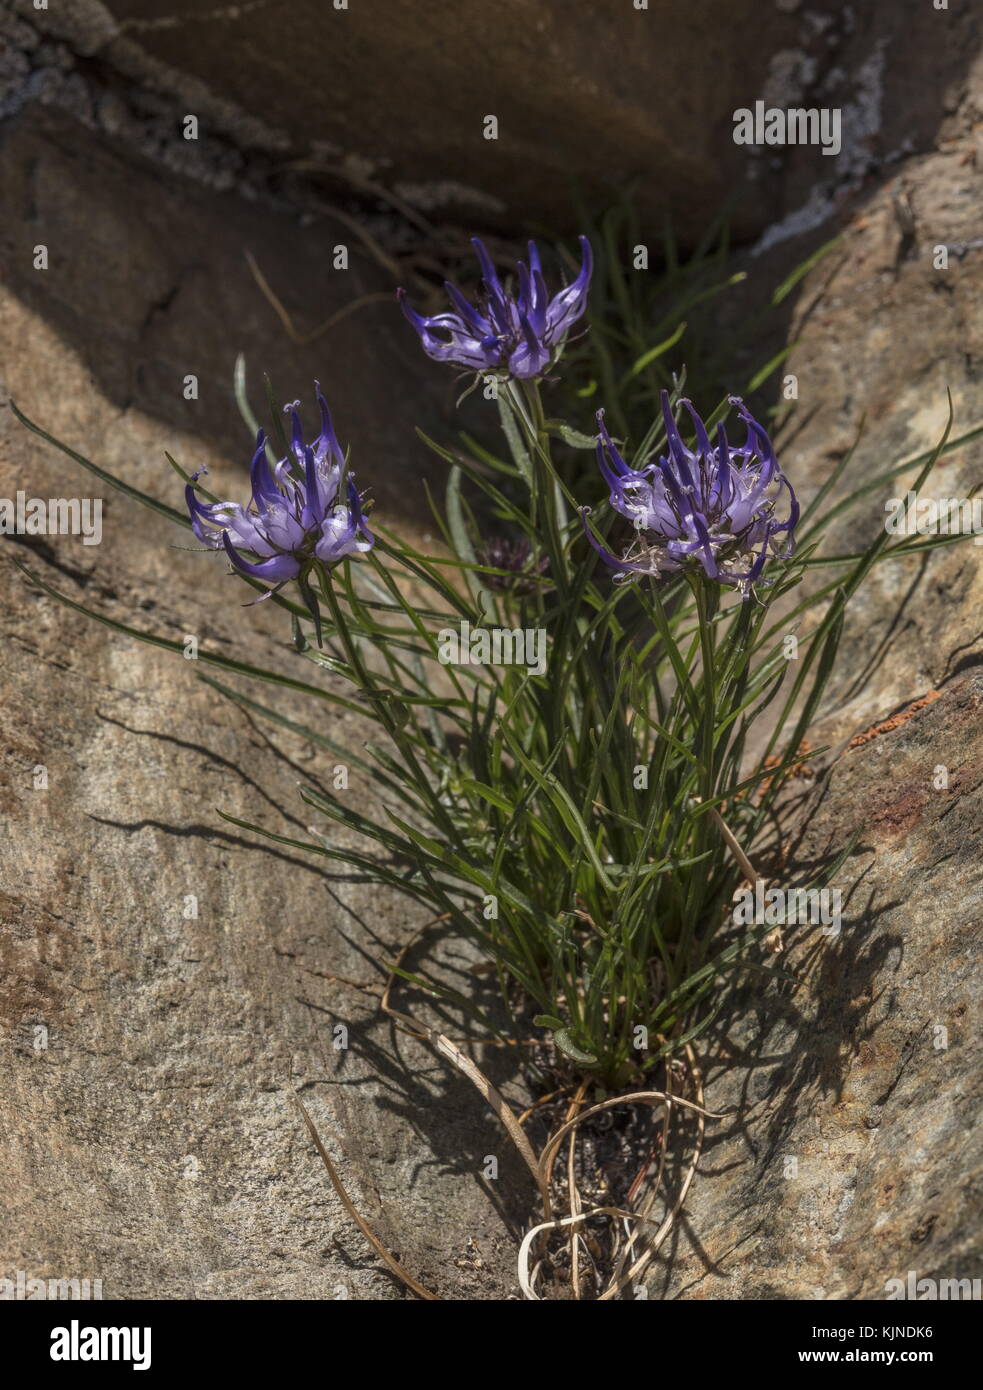 Globe-headed Rampion, Phyteuma hemisphaerica in flower in acid rock crevice, Swiss Alps. Stock Photo